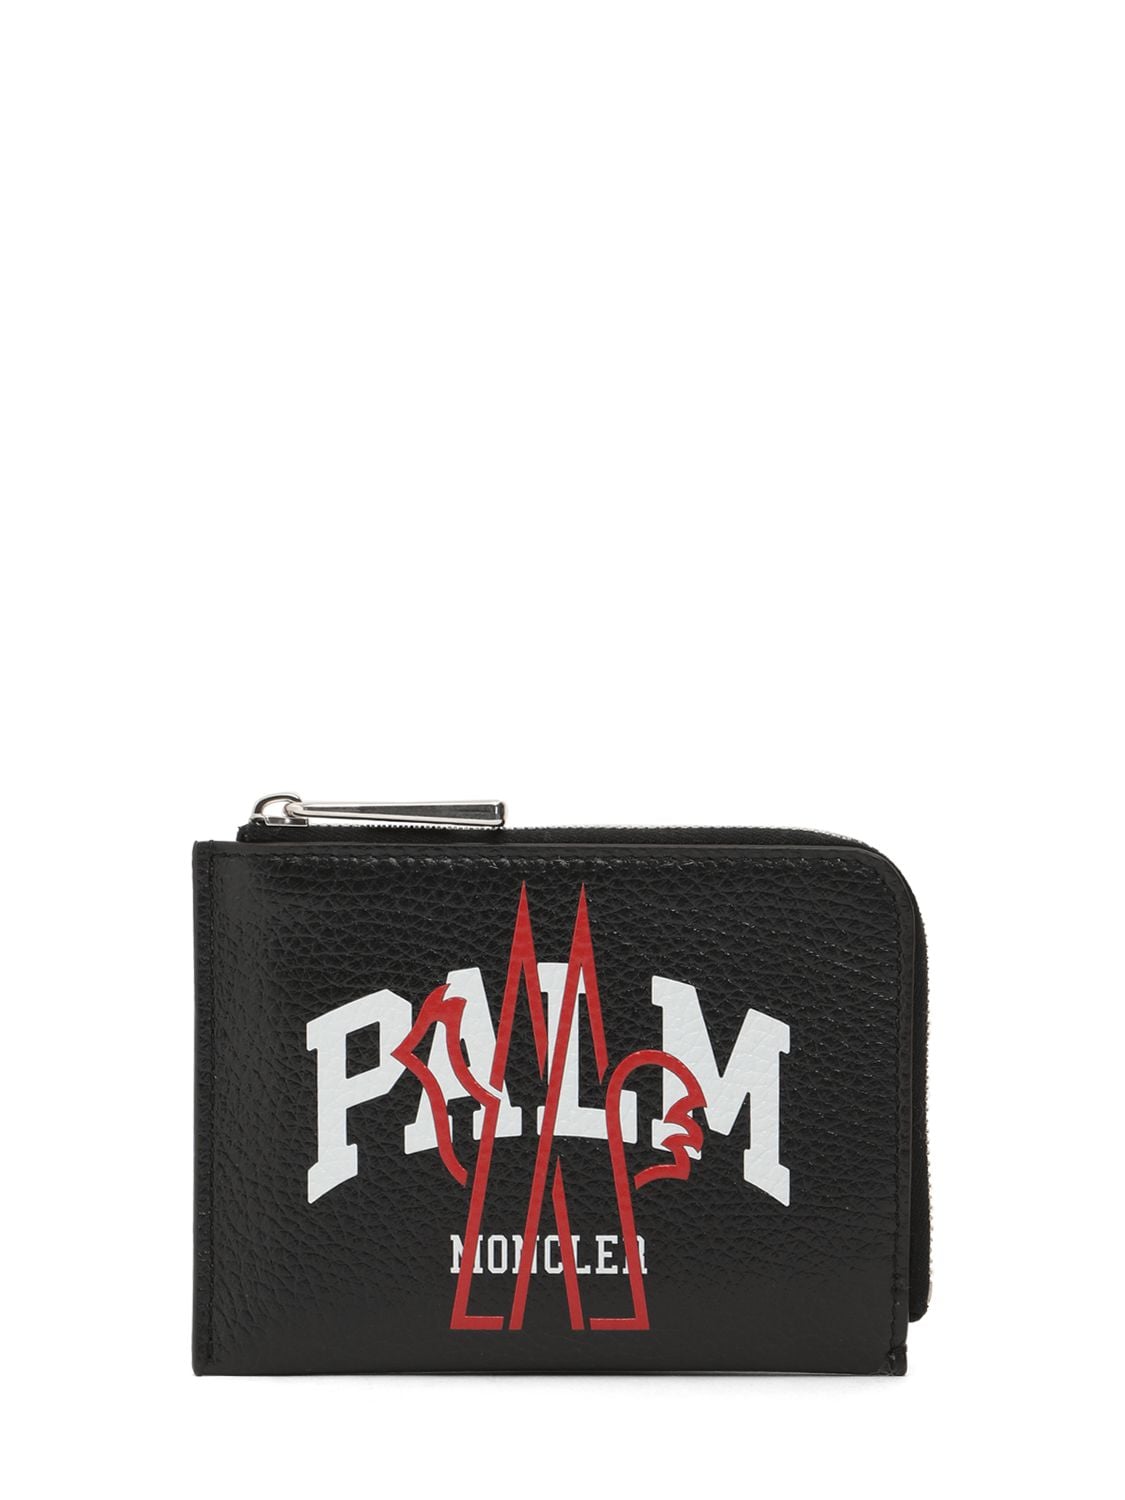 Moncler Genius Moncler X Palm Angels Wallet In Black